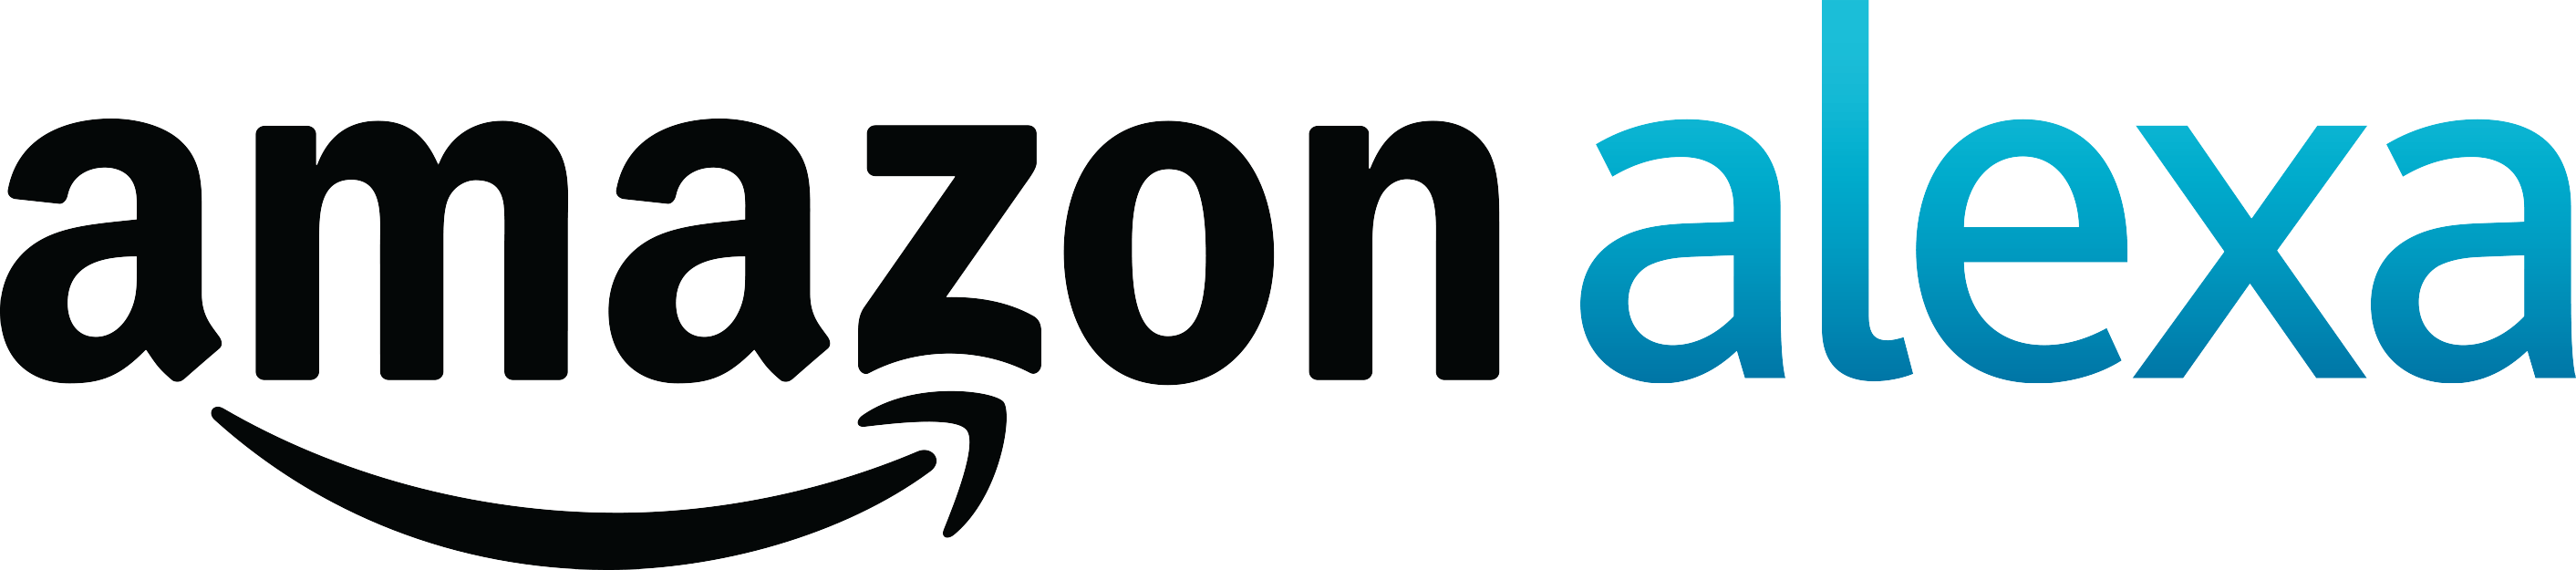 Alexa.com Logo - Amazon Alexa Logo